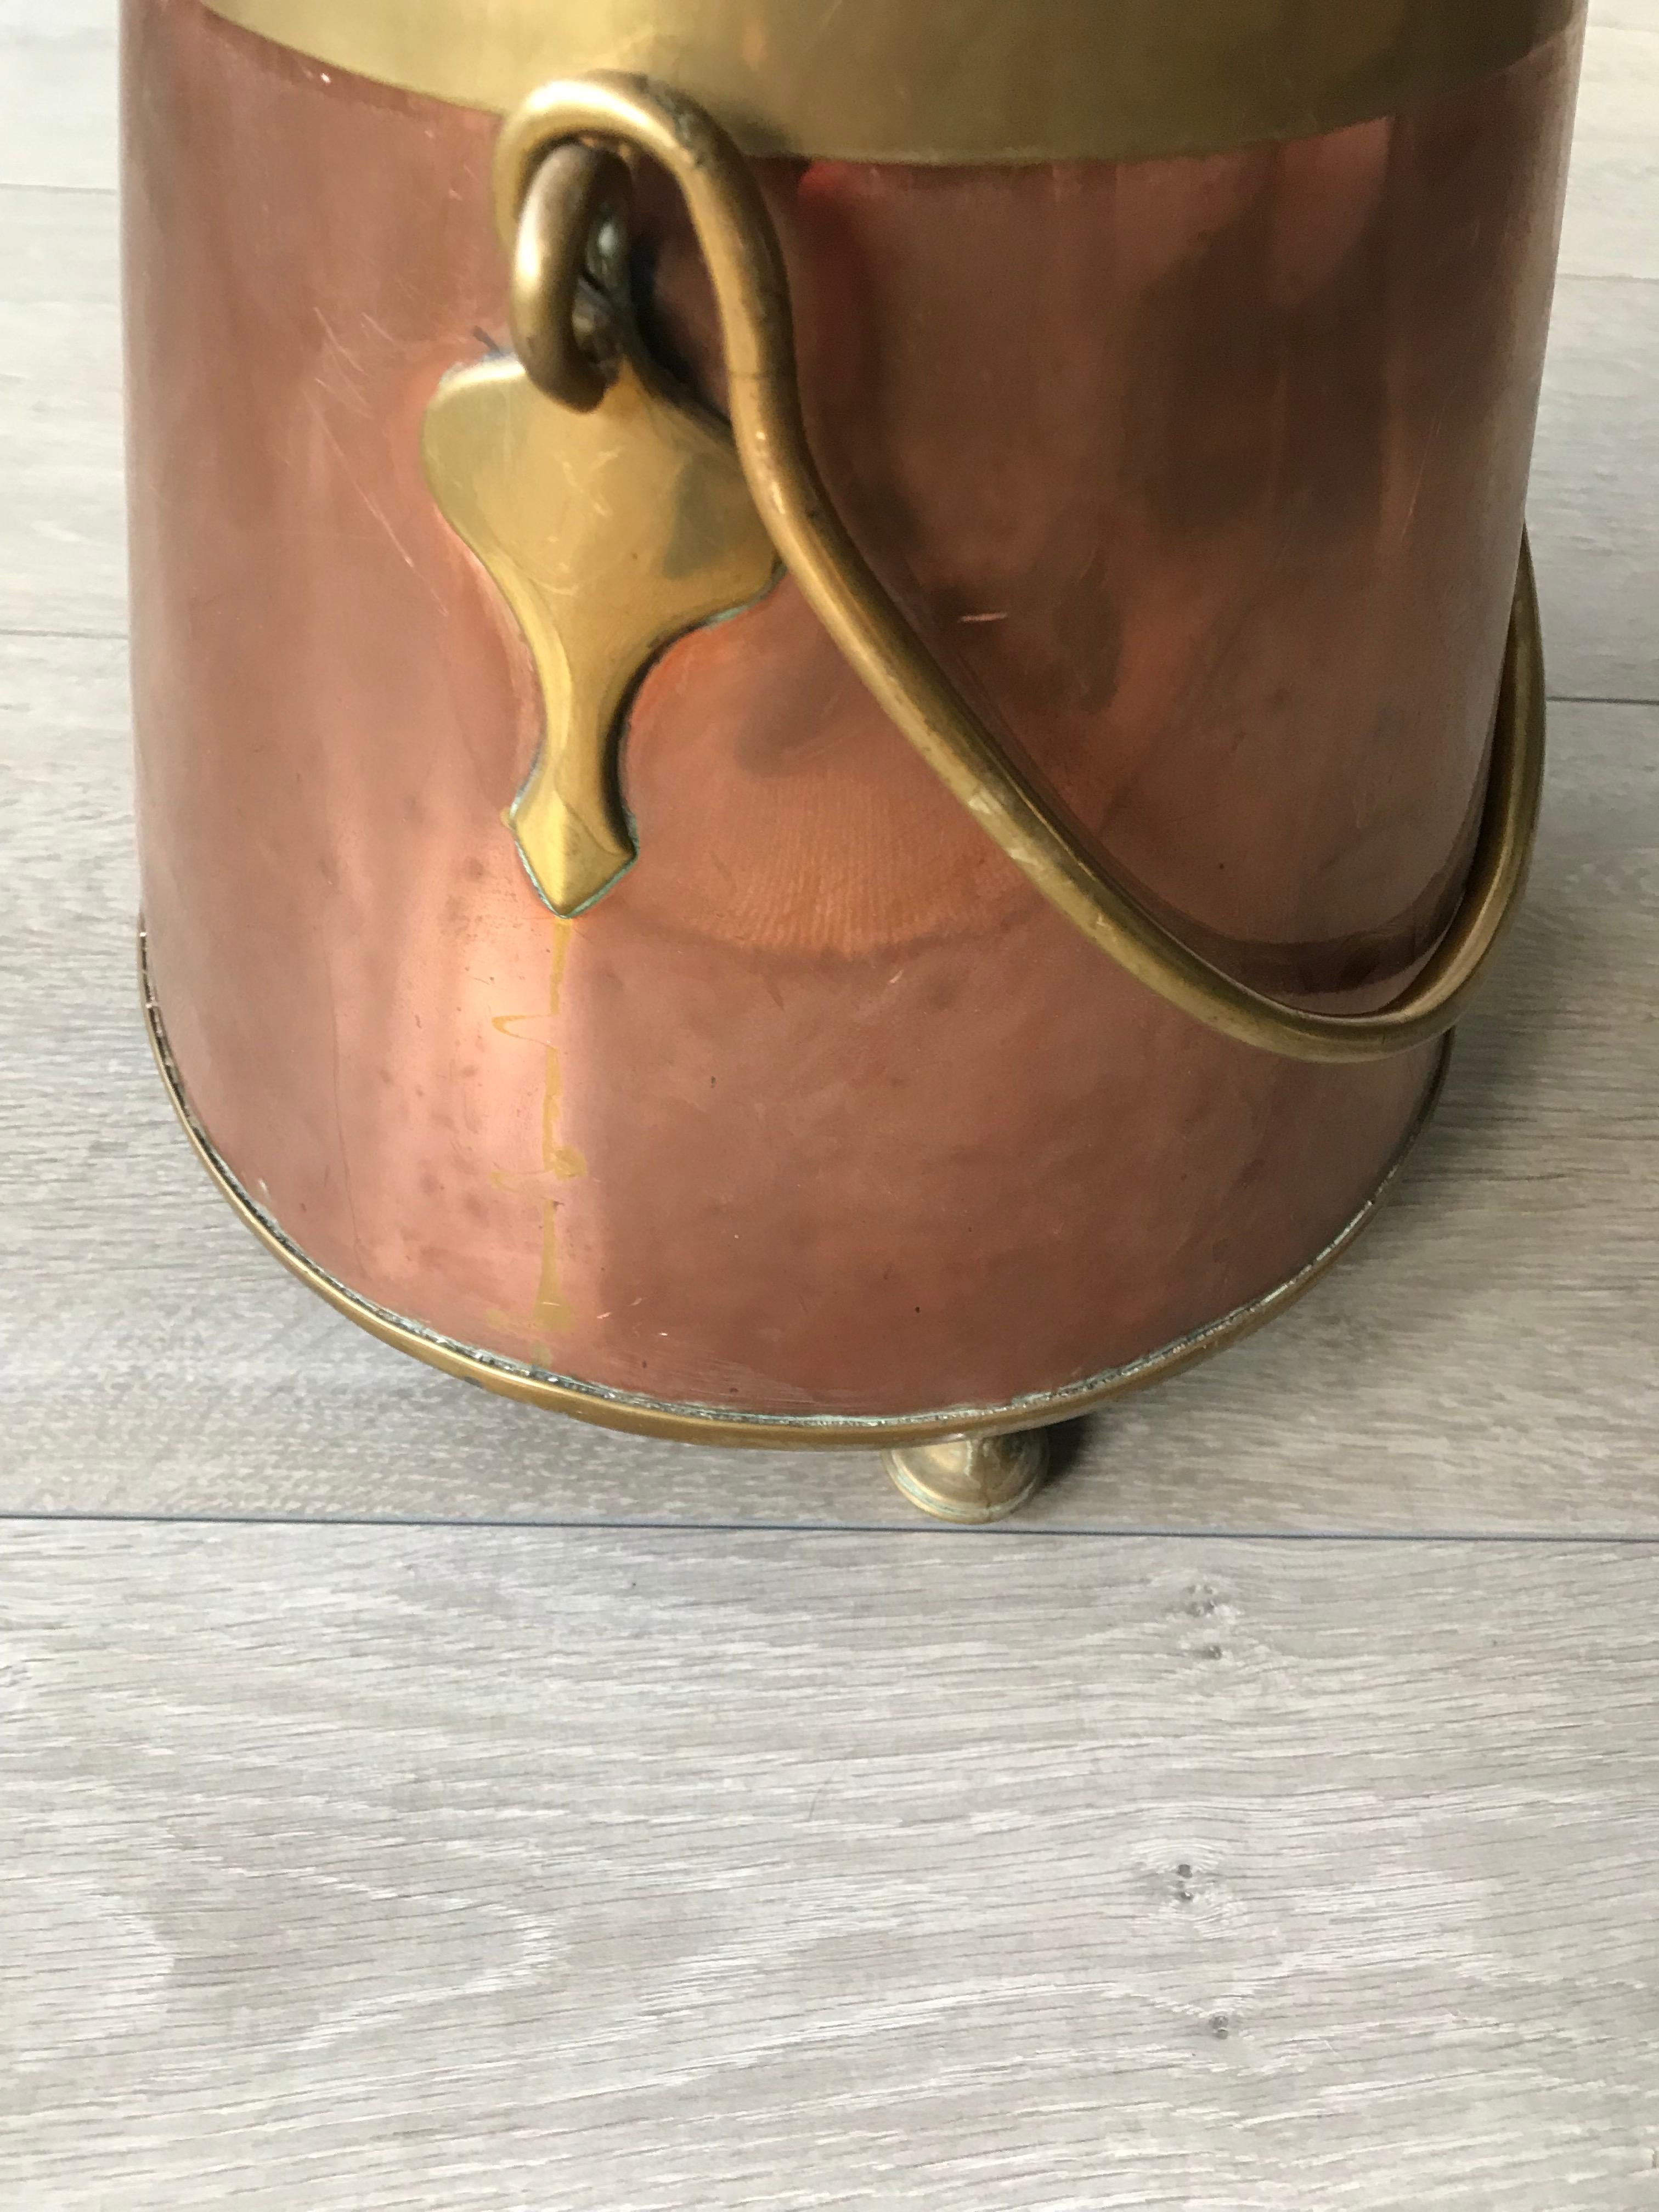 antique copper fire extinguisher